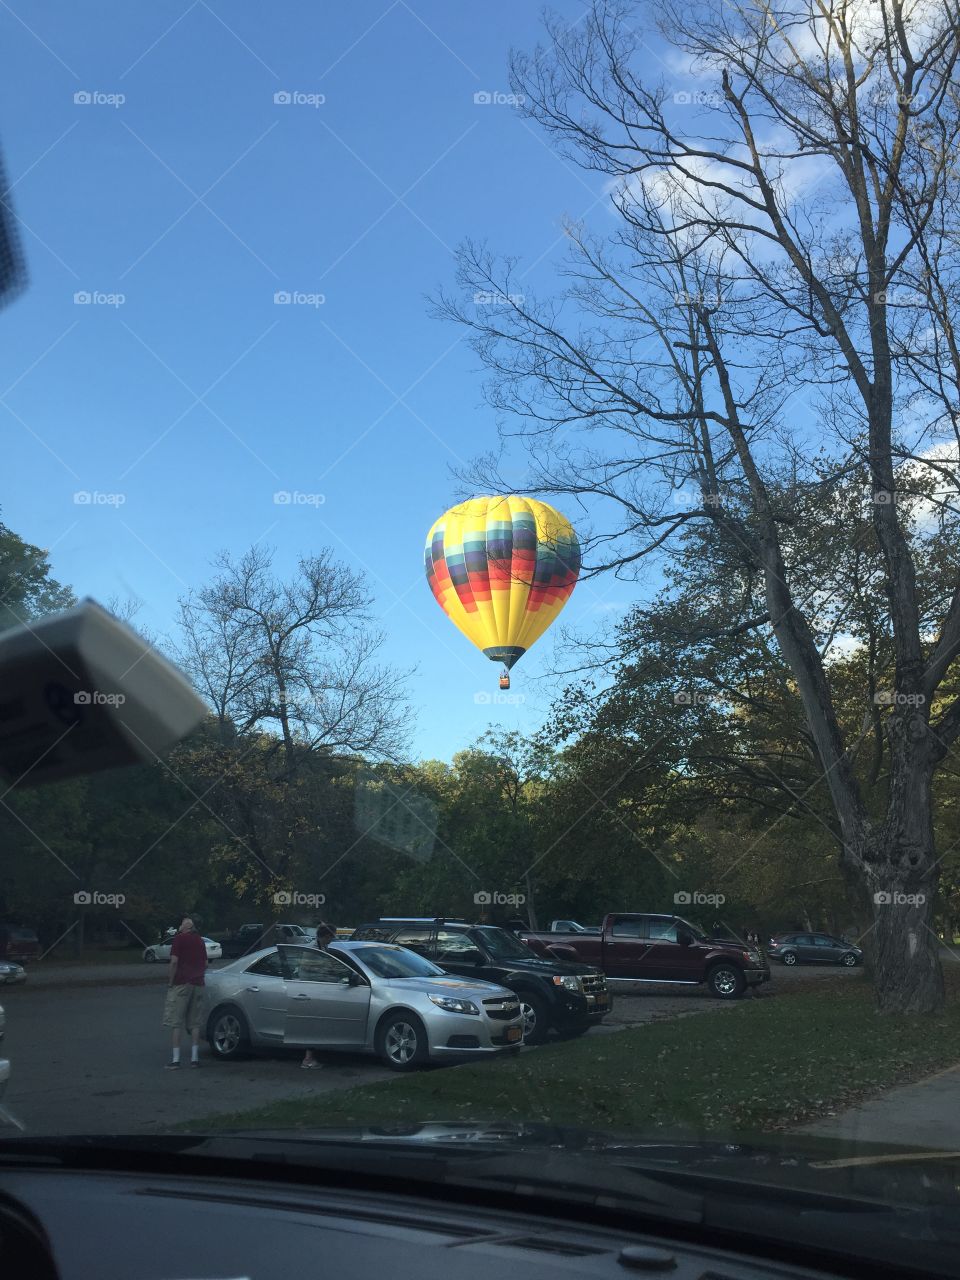 Hot air balloon floats over autumn trees